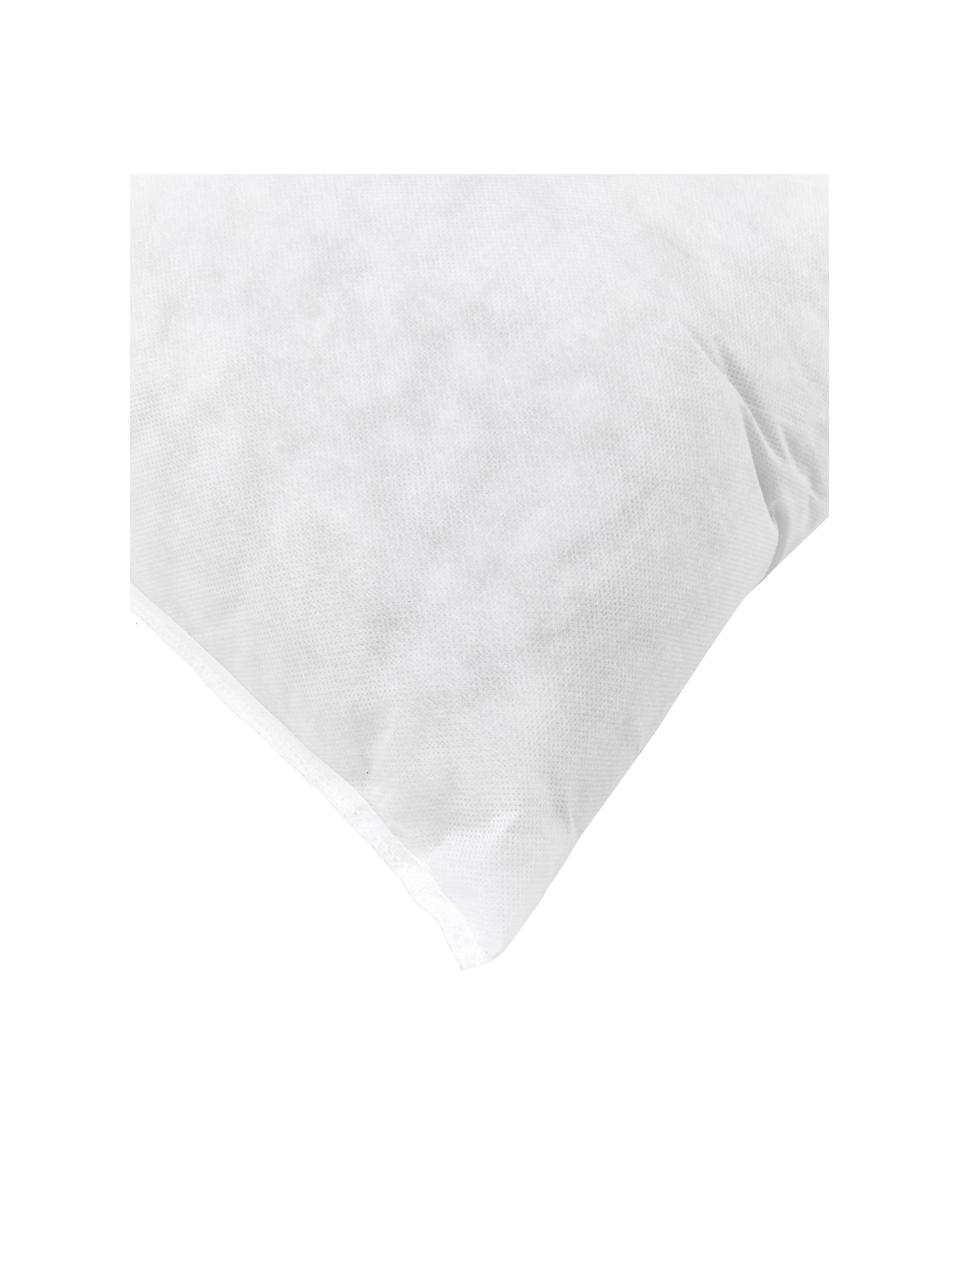 Binnenkussen Egret, 35x110, polyester-vulling, Wit, B 35 x L 110 cm